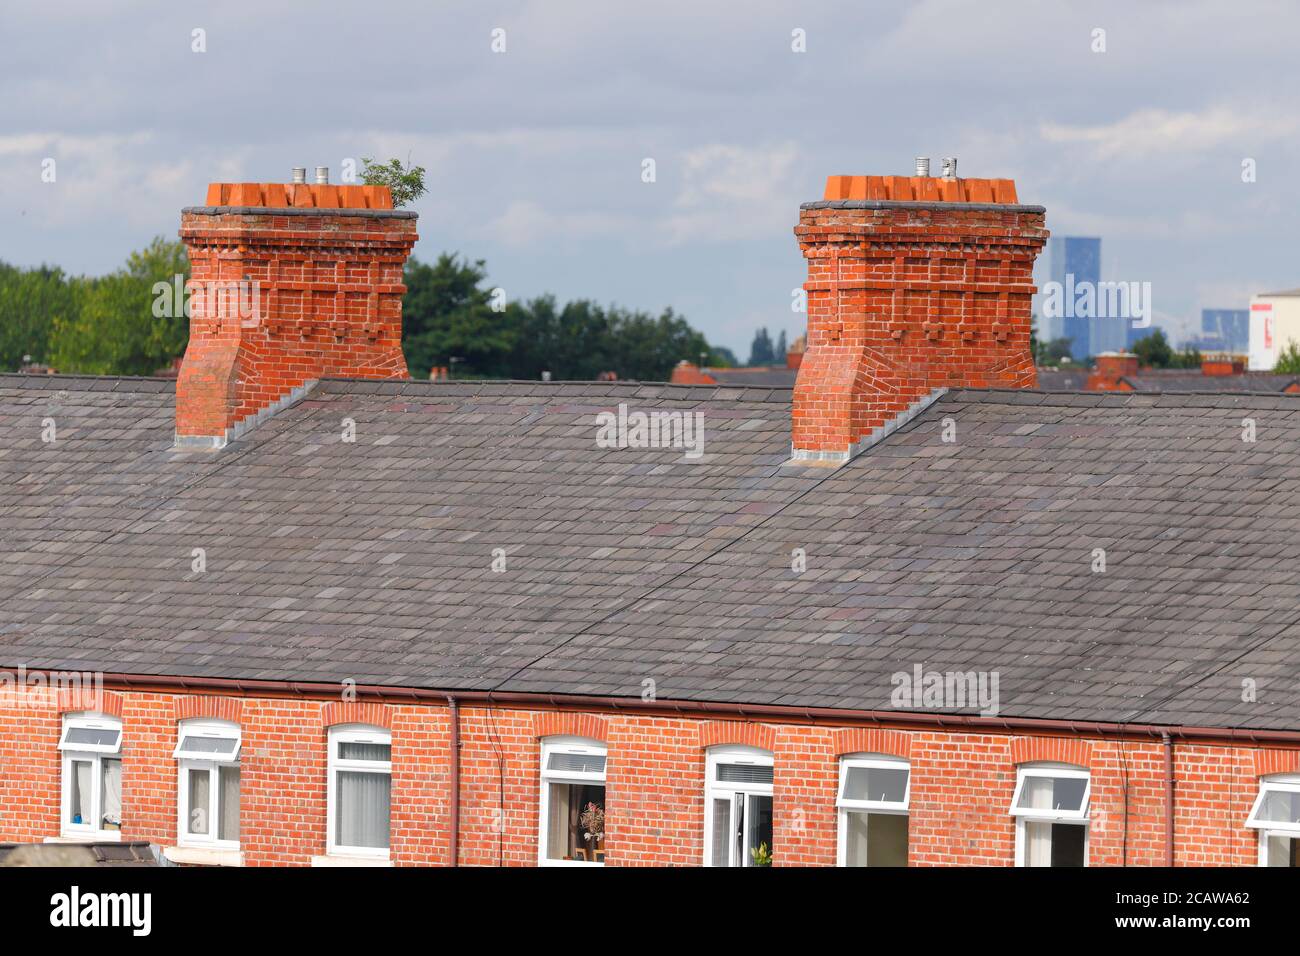 Red brick chimneys on rooftops in Ashton Under Lyne, Manchester. Stock Photo